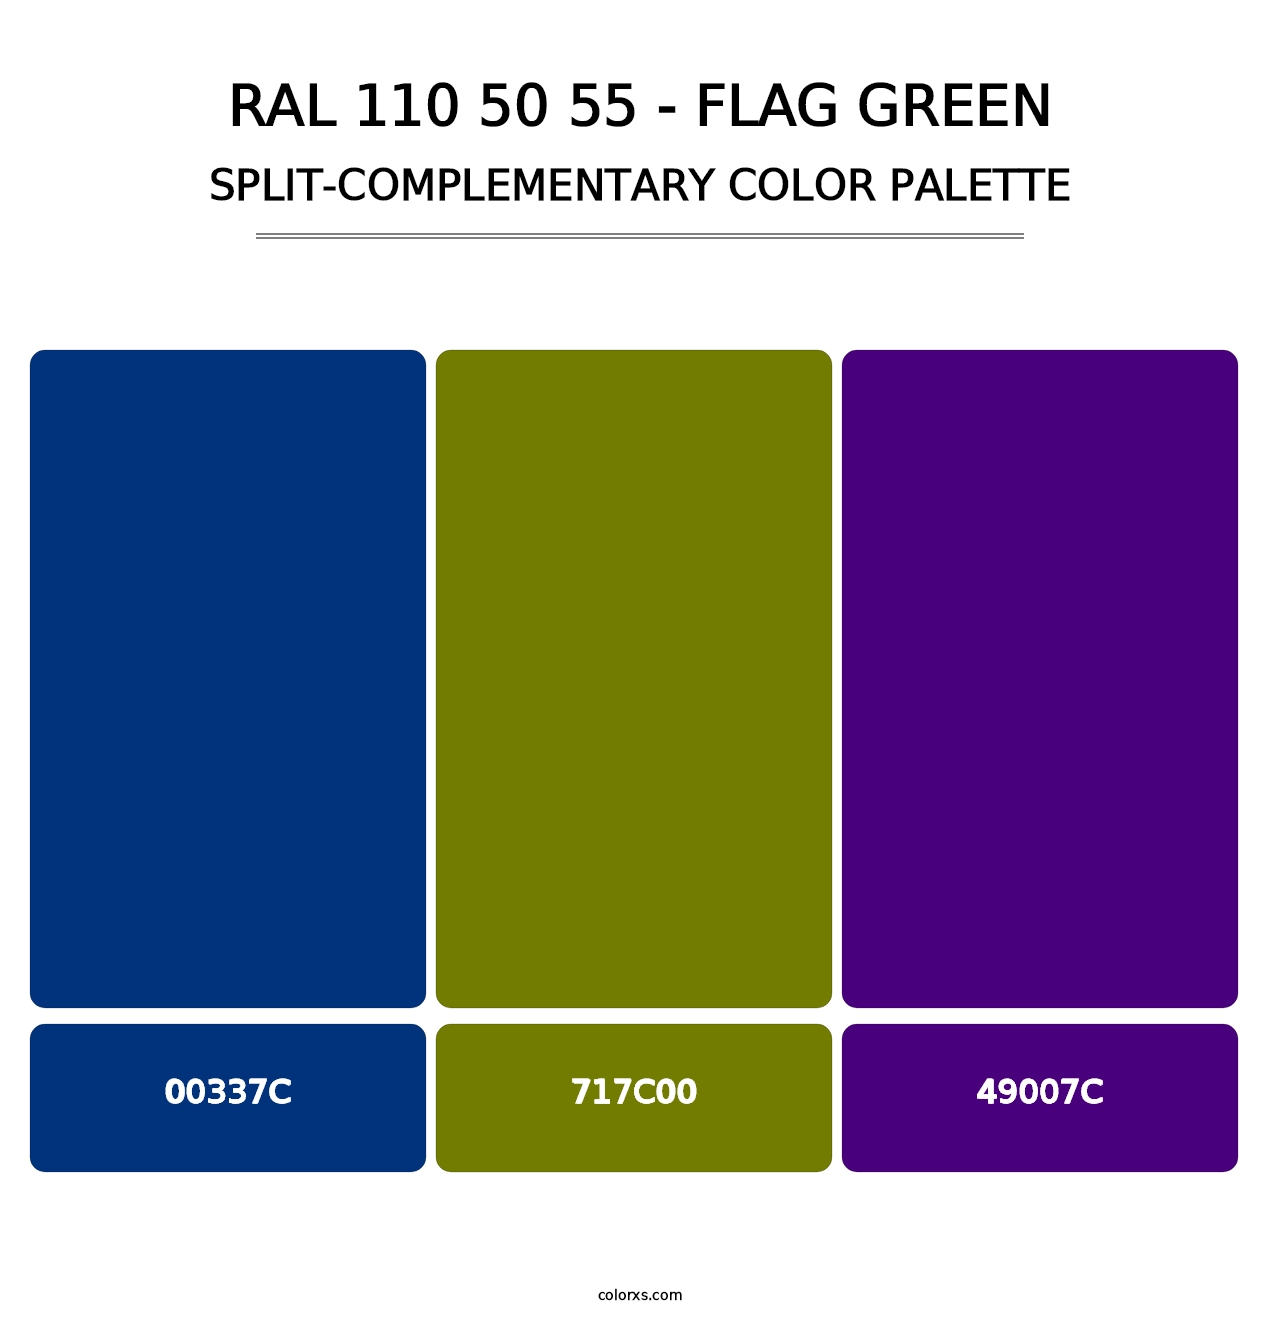 RAL 110 50 55 - Flag Green - Split-Complementary Color Palette